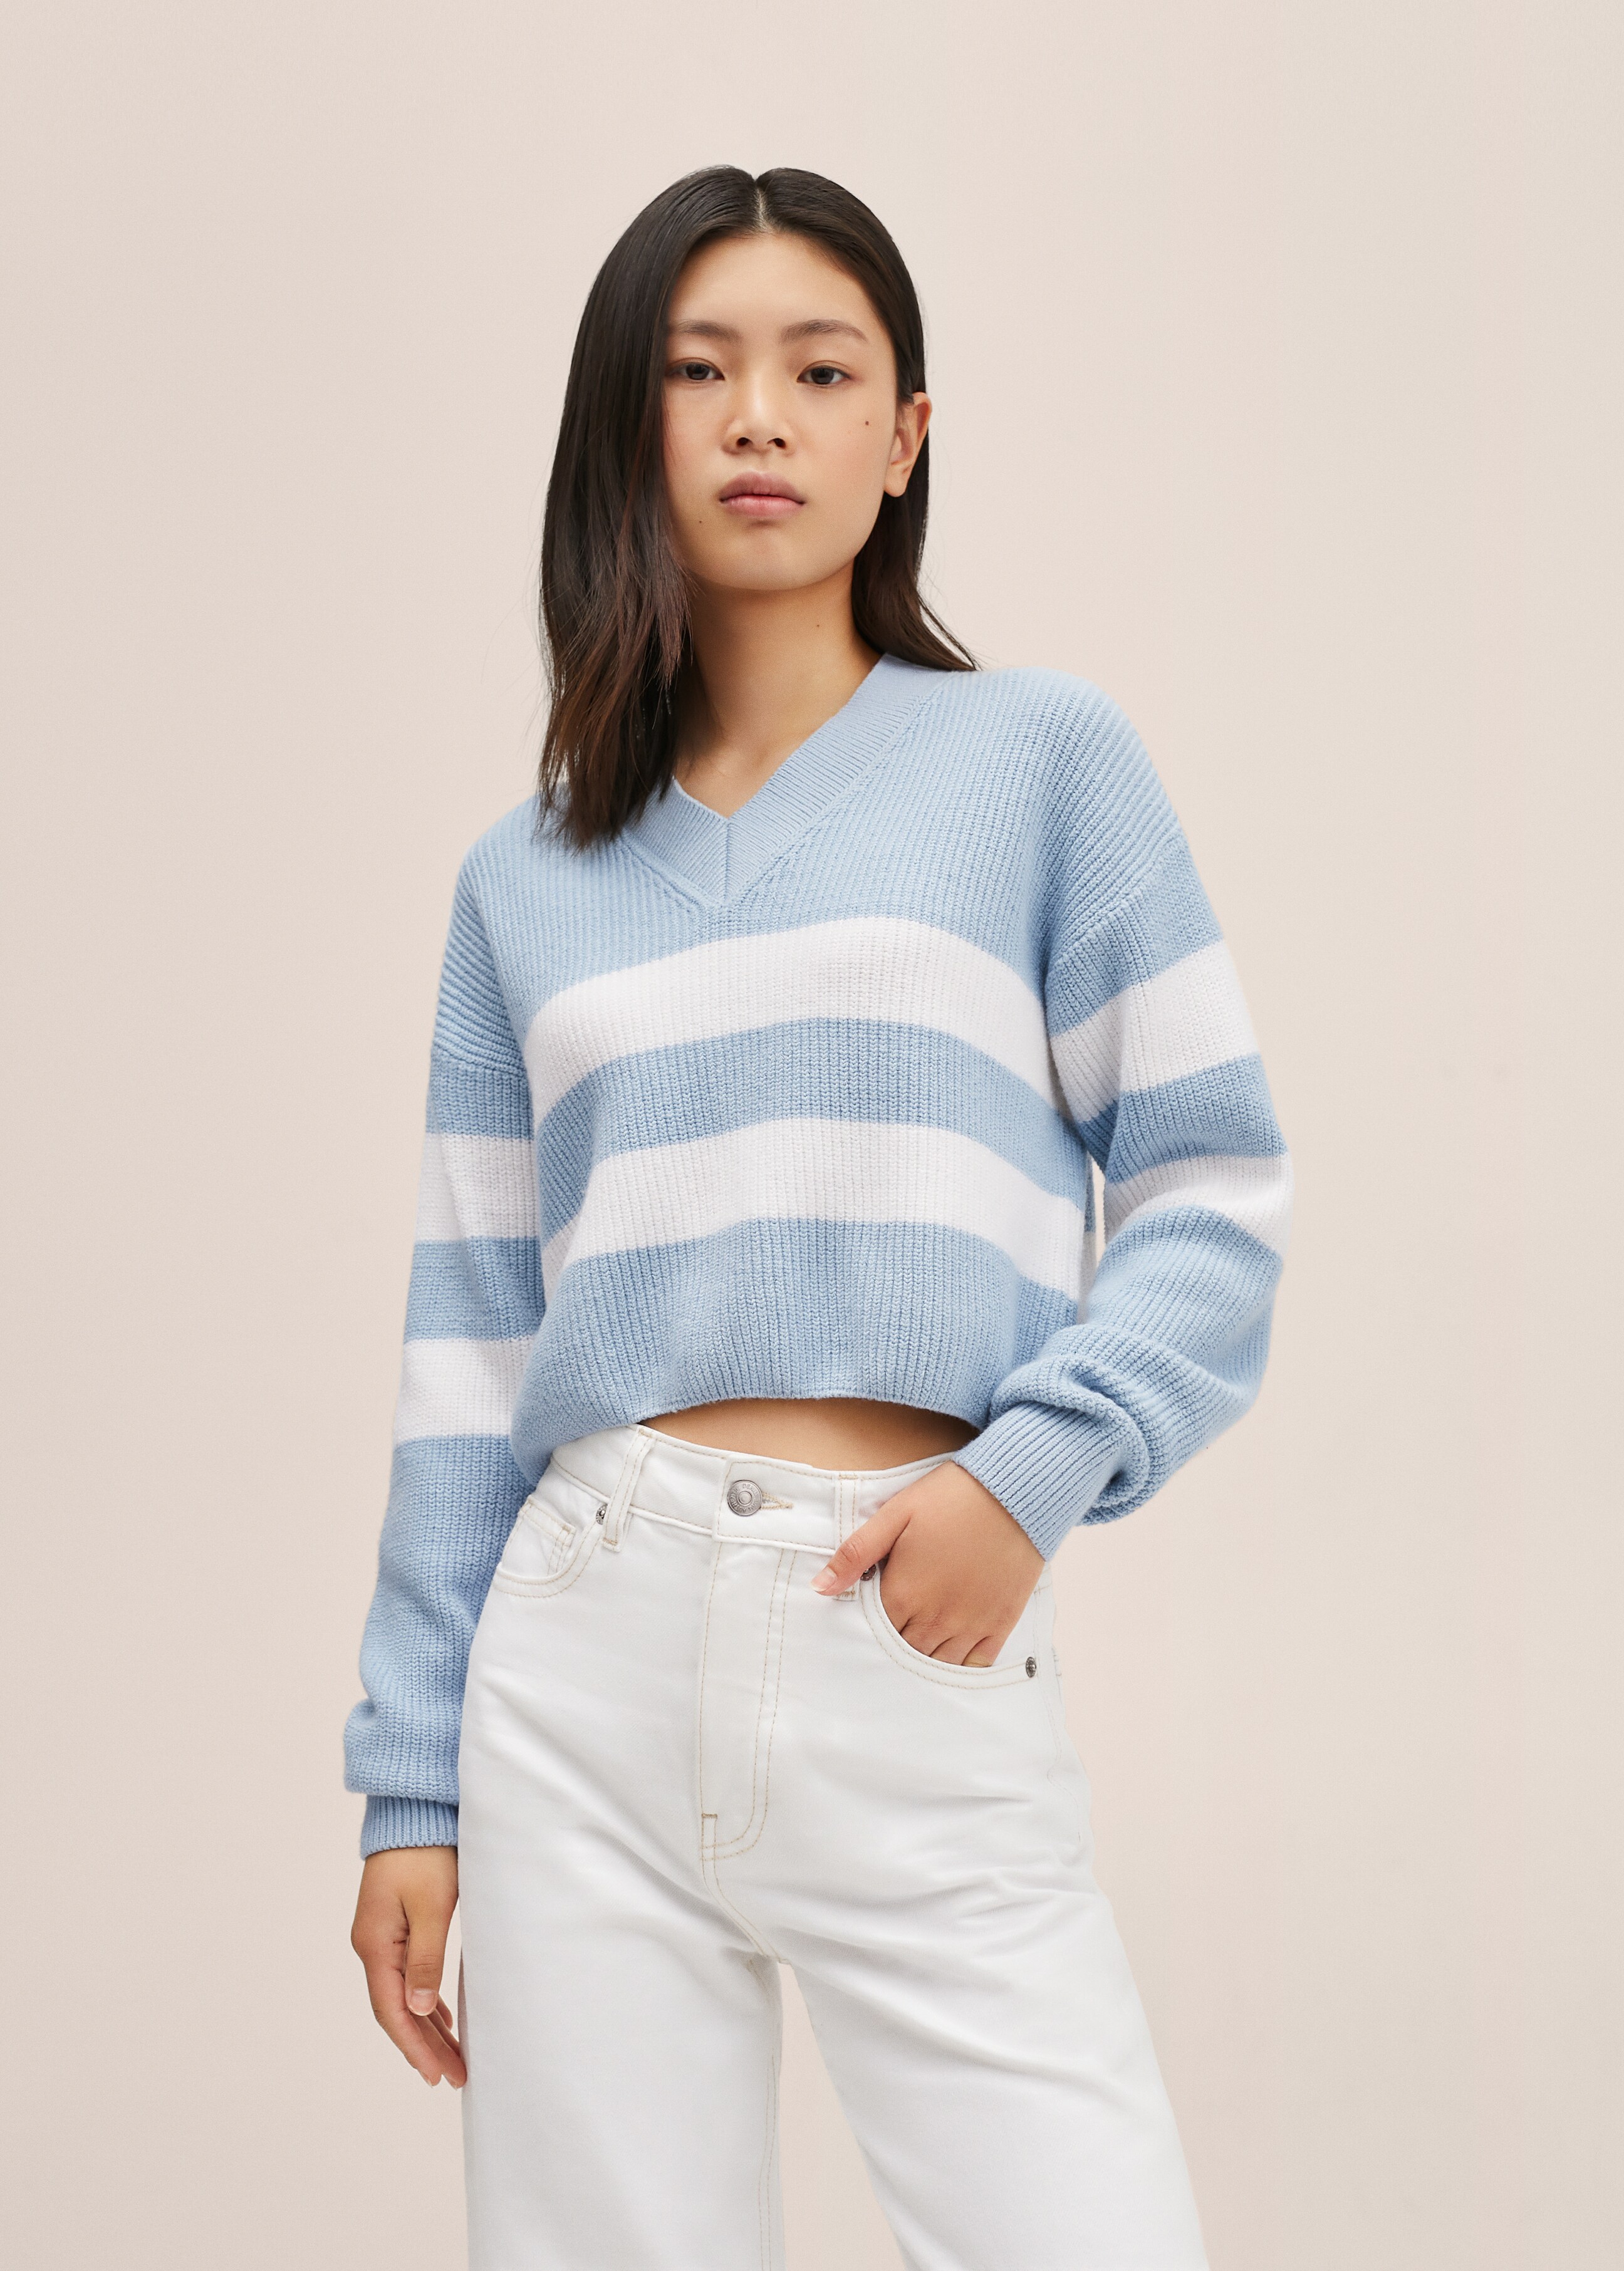 V-neck striped sweater - Medium plane